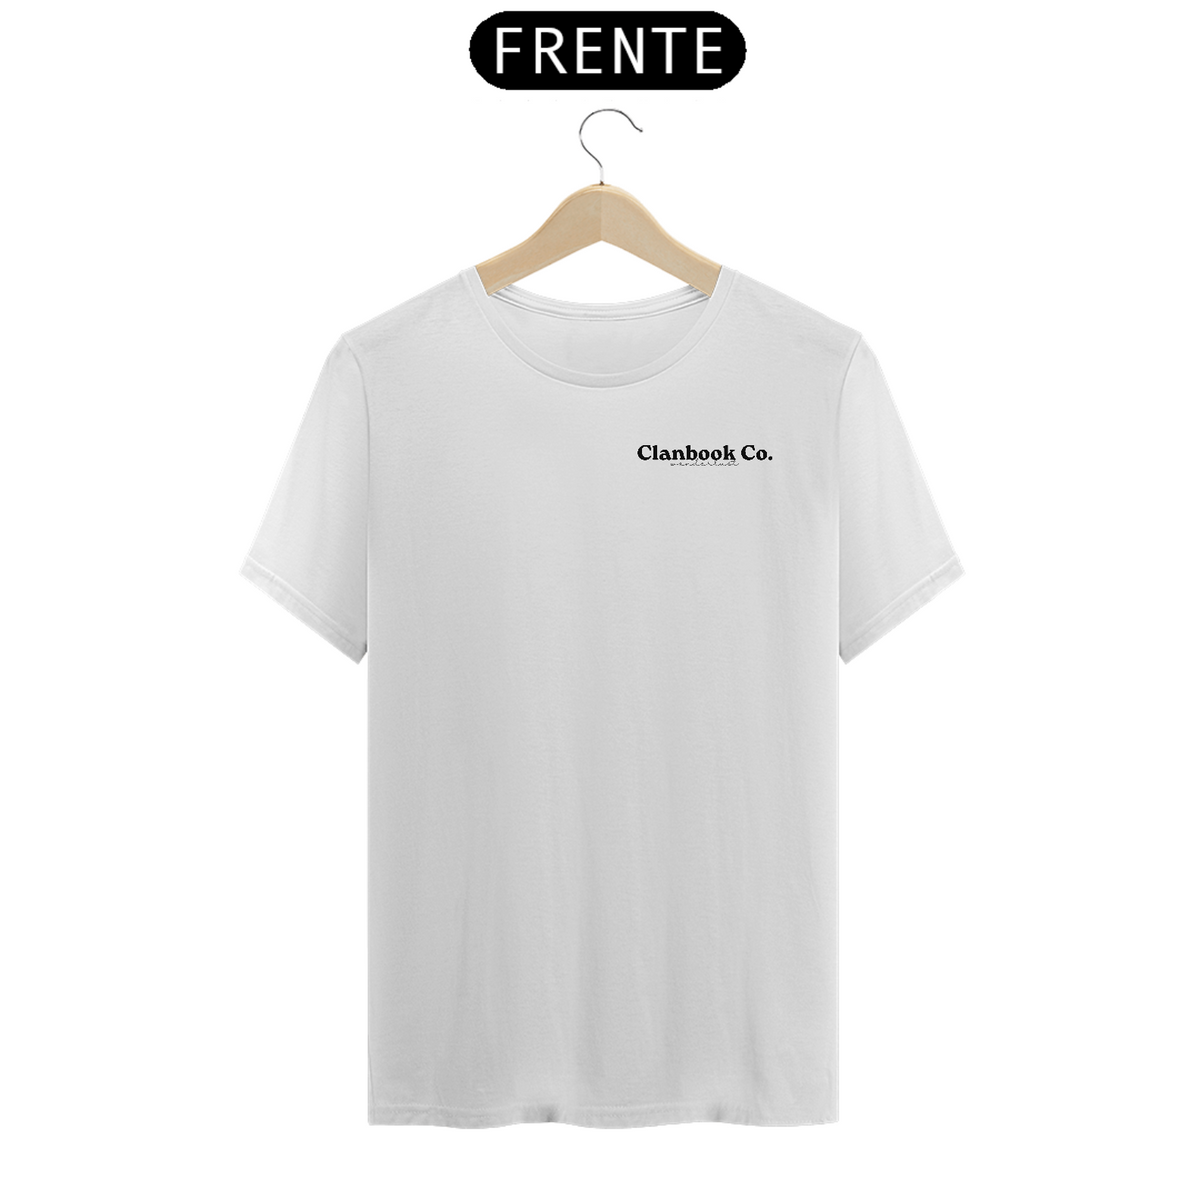 Nome do produto: T-Shirt Prime Wanderlust